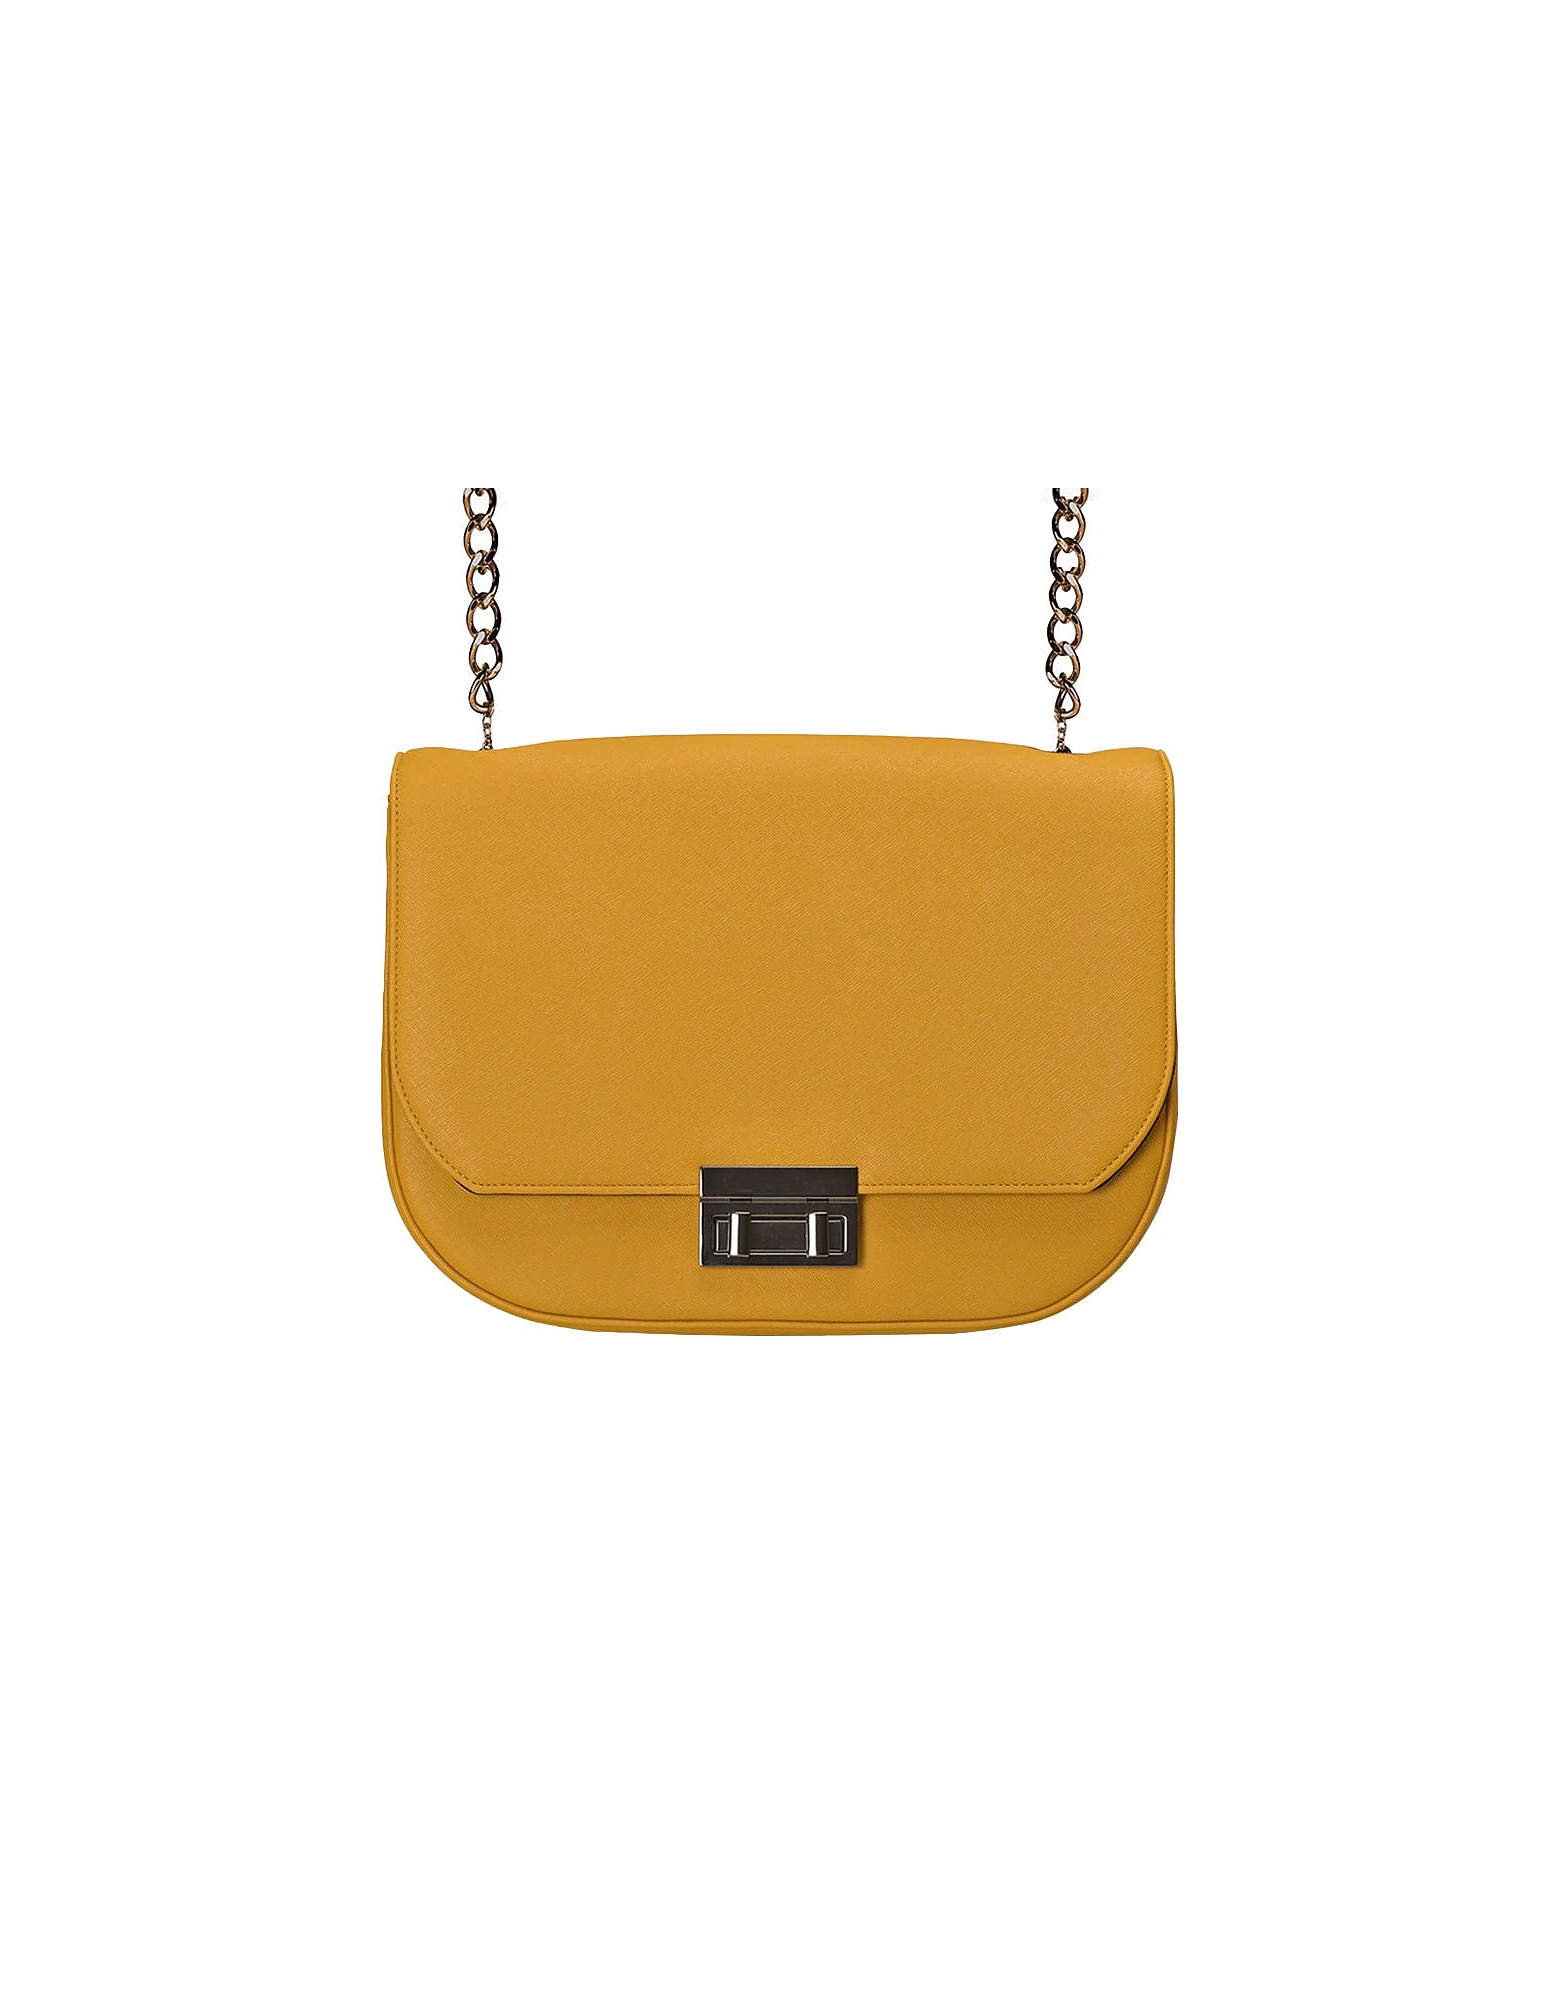 Anema Designer Handbags Ischia Mia - Corn Leather And Rpet Crossbody Bag In Jaune